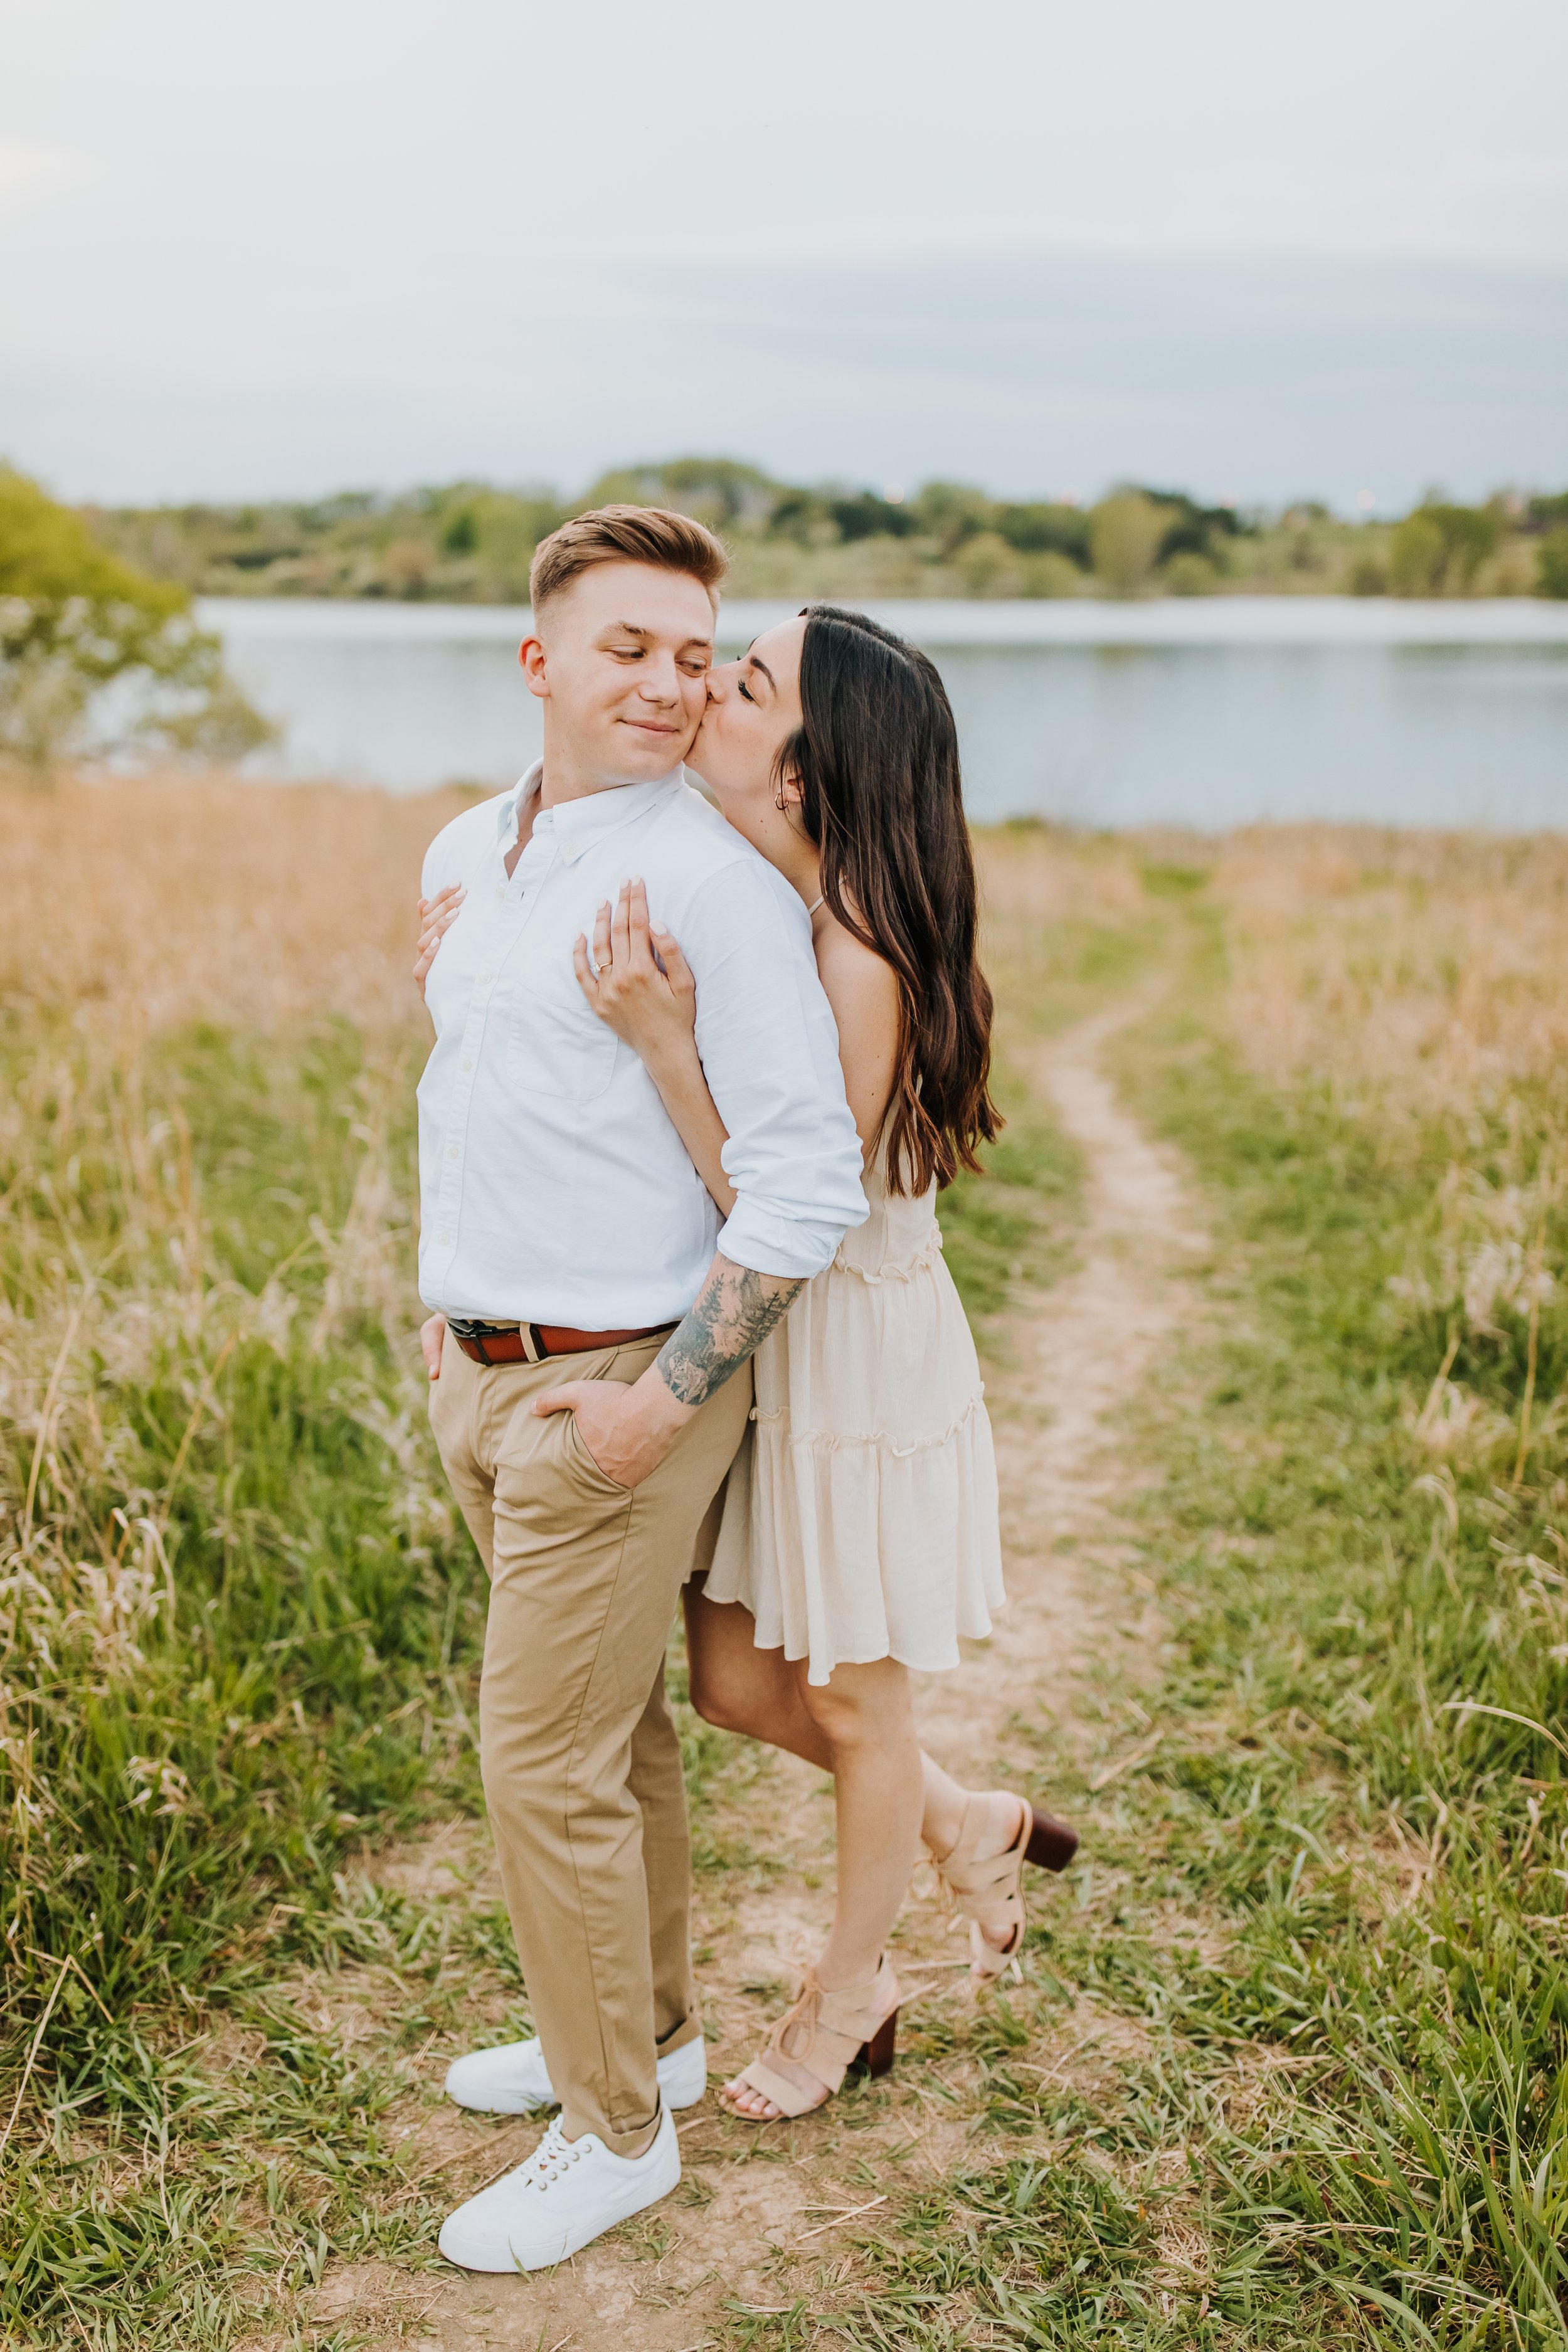 Allison & Liam - Engaged - Nathaniel Jensen Photography - Omaha Nebraska Wedding Photographer-134.jpg